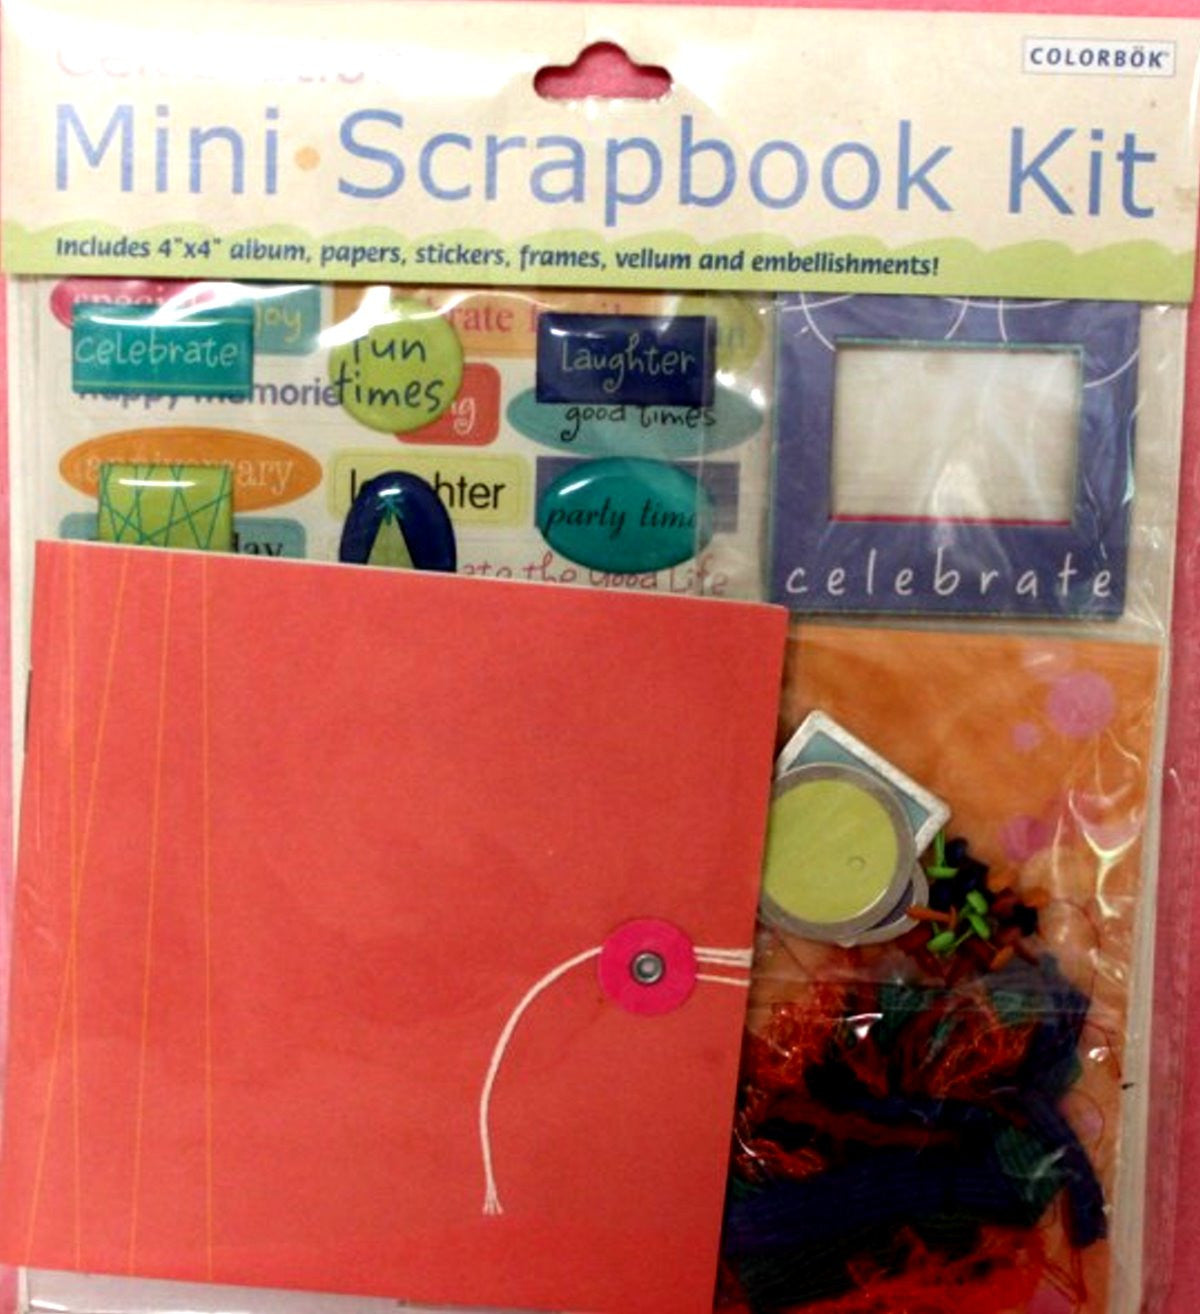 Lot of 2 Mini Scrapbook Kits Colorbok Friends & Best Friends